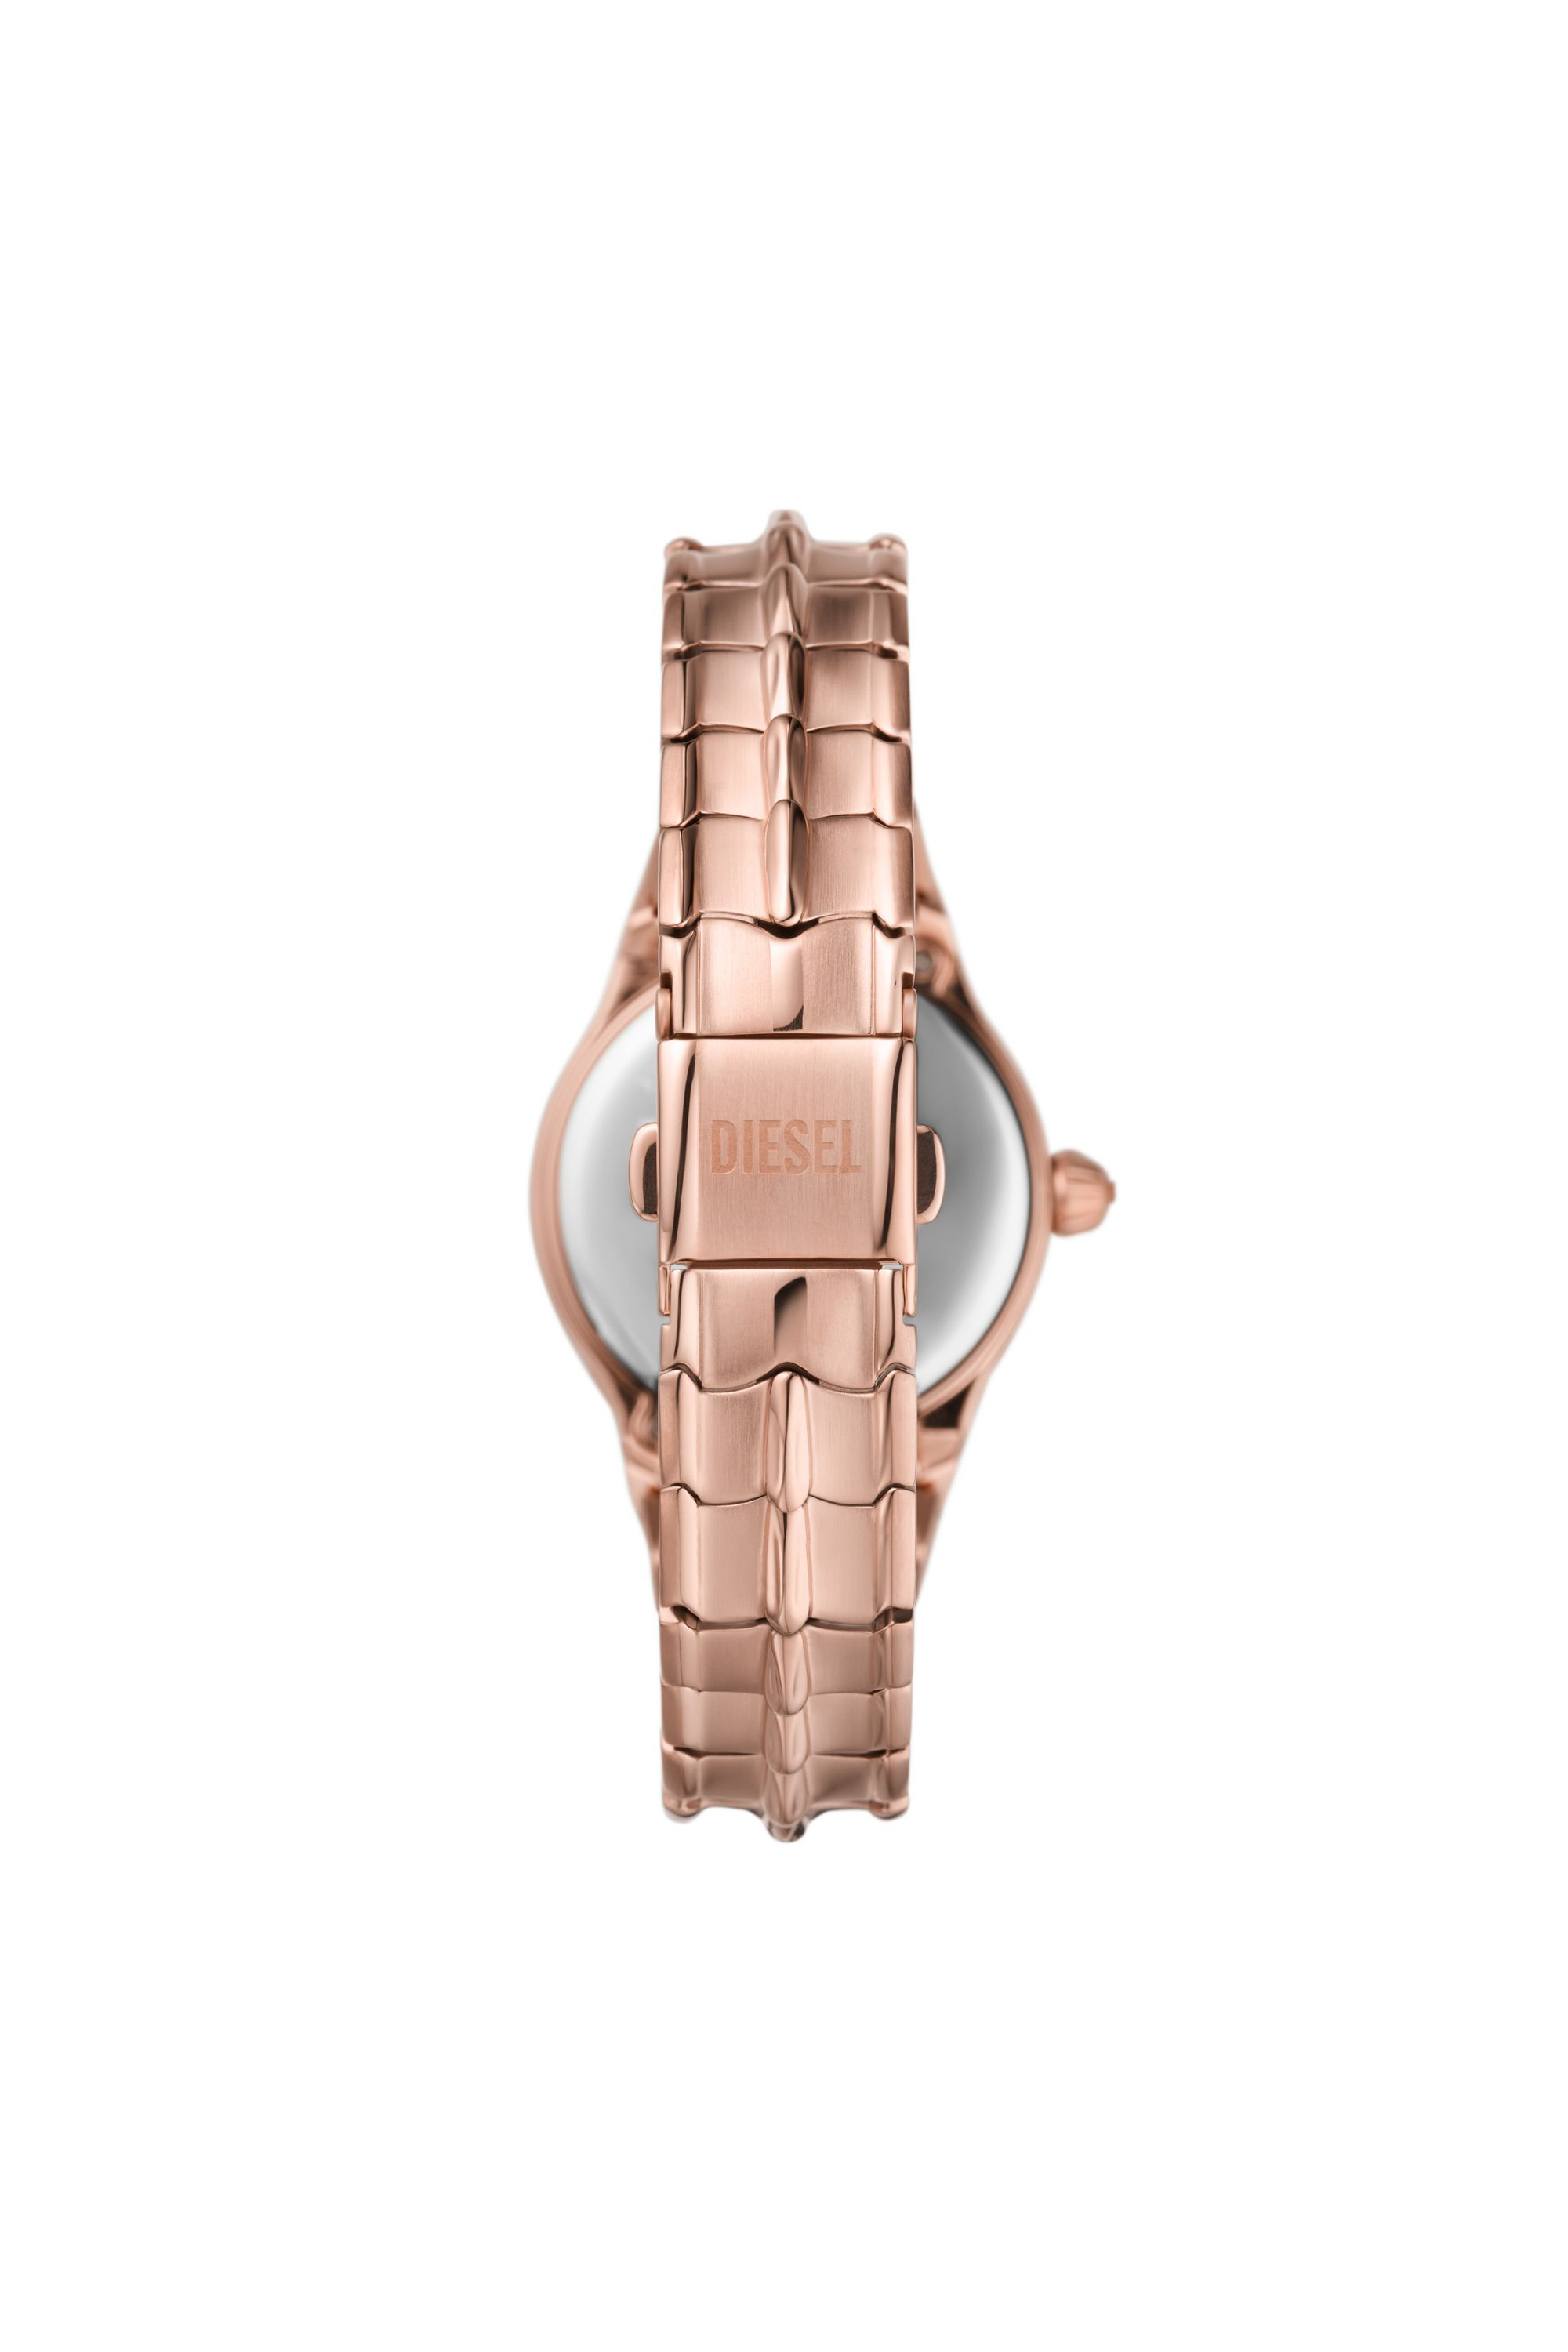 Diesel - DZ5604, Woman Vert three-hand rose gold-tone stainless steel watch in Pink - Image 3